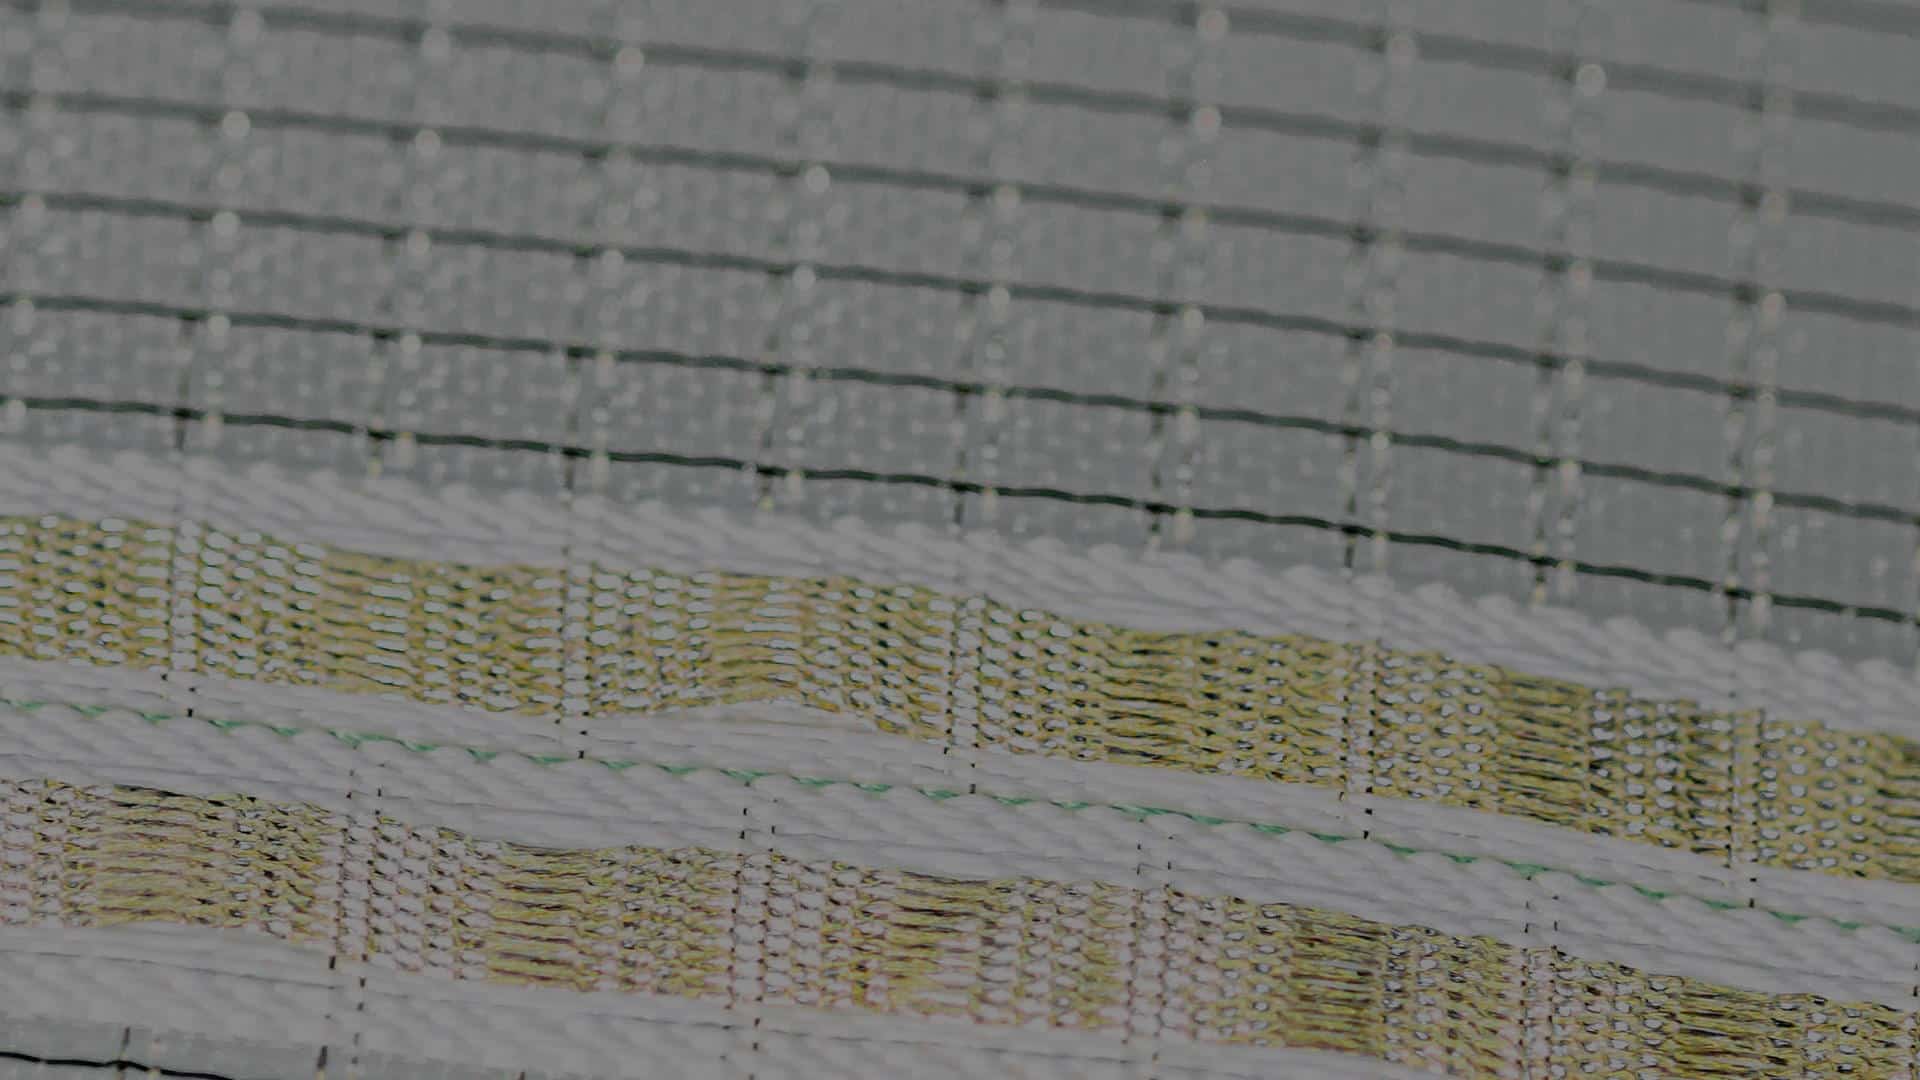 Sensormatten & textile Sensoren vom Hersteller TFP Technology